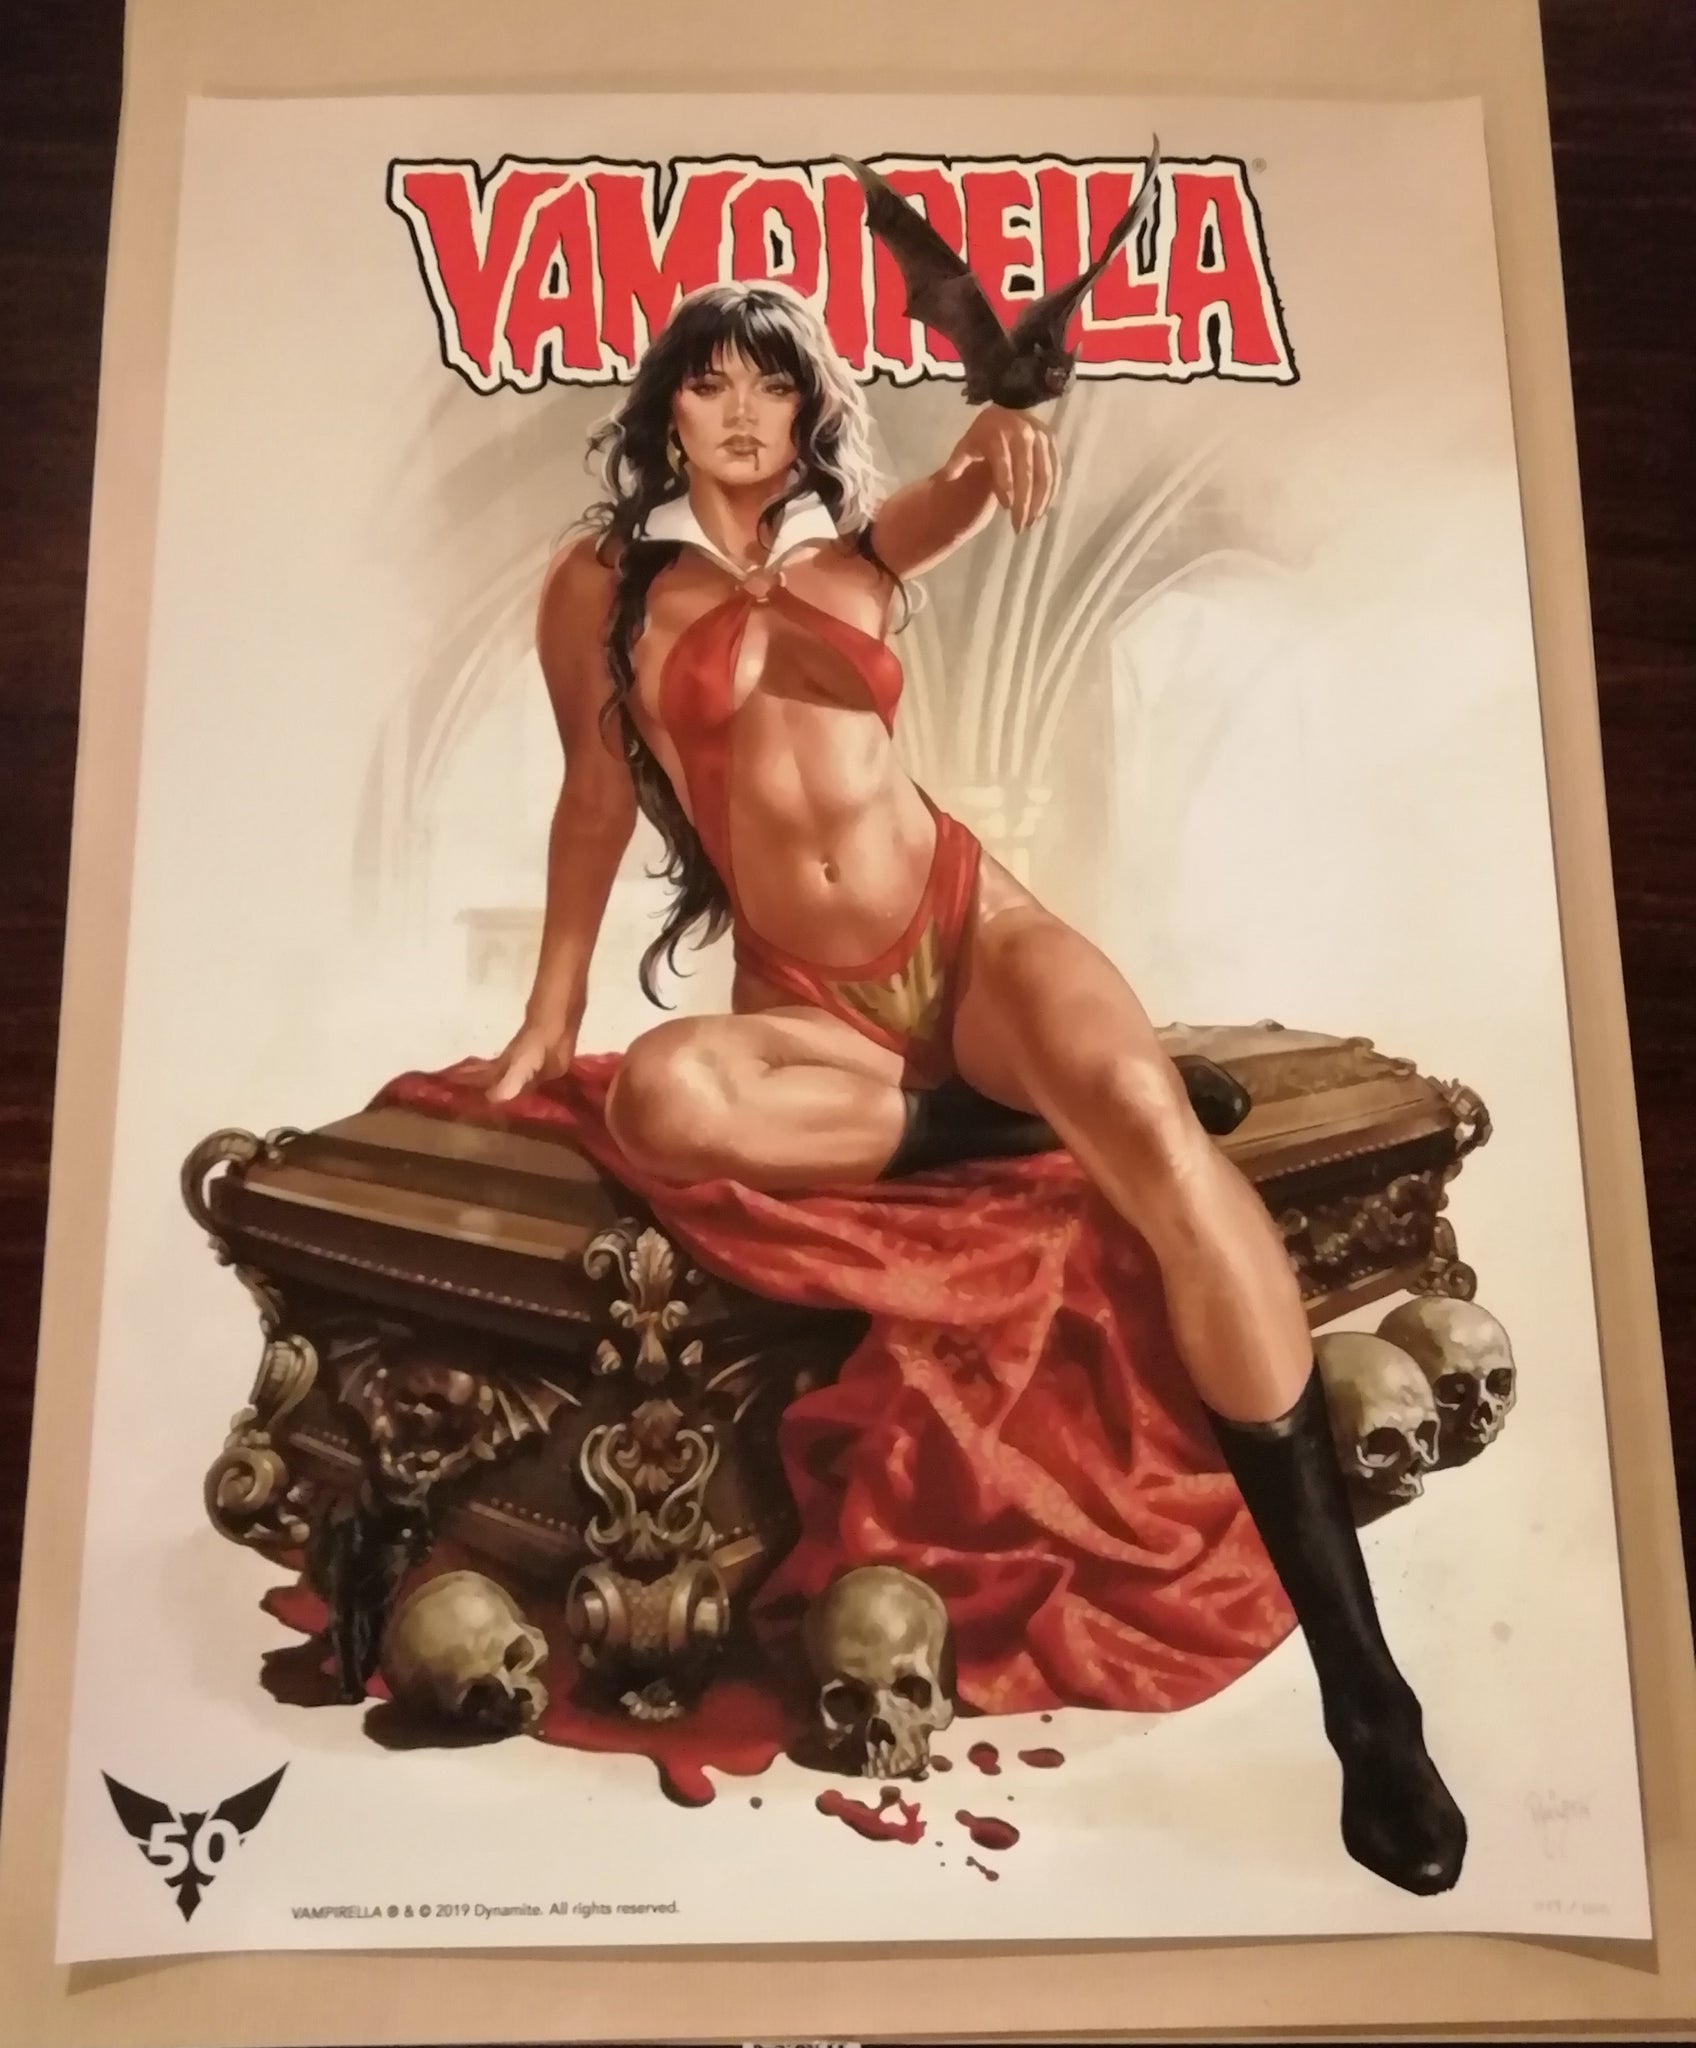 Geek Fest x Vampirella - Ruiz Burgos Exclusive Giclee Print